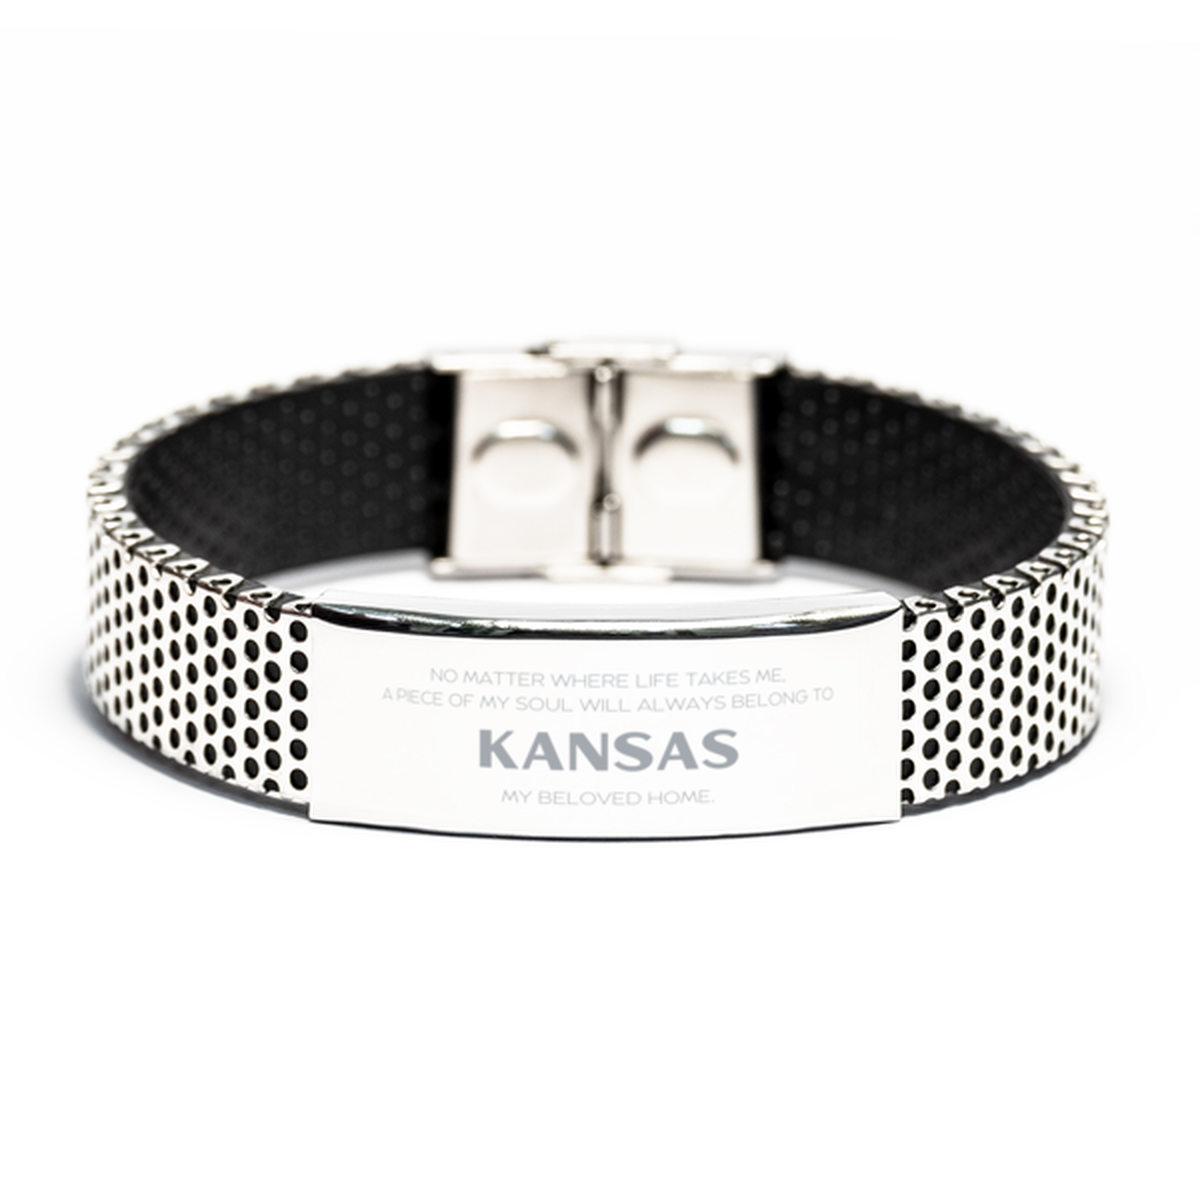 Love Kansas State Gifts, My soul will always belong to Kansas, Proud Stainless Steel Bracelet, Birthday Unique Gifts For Kansas Men, Women, Friends